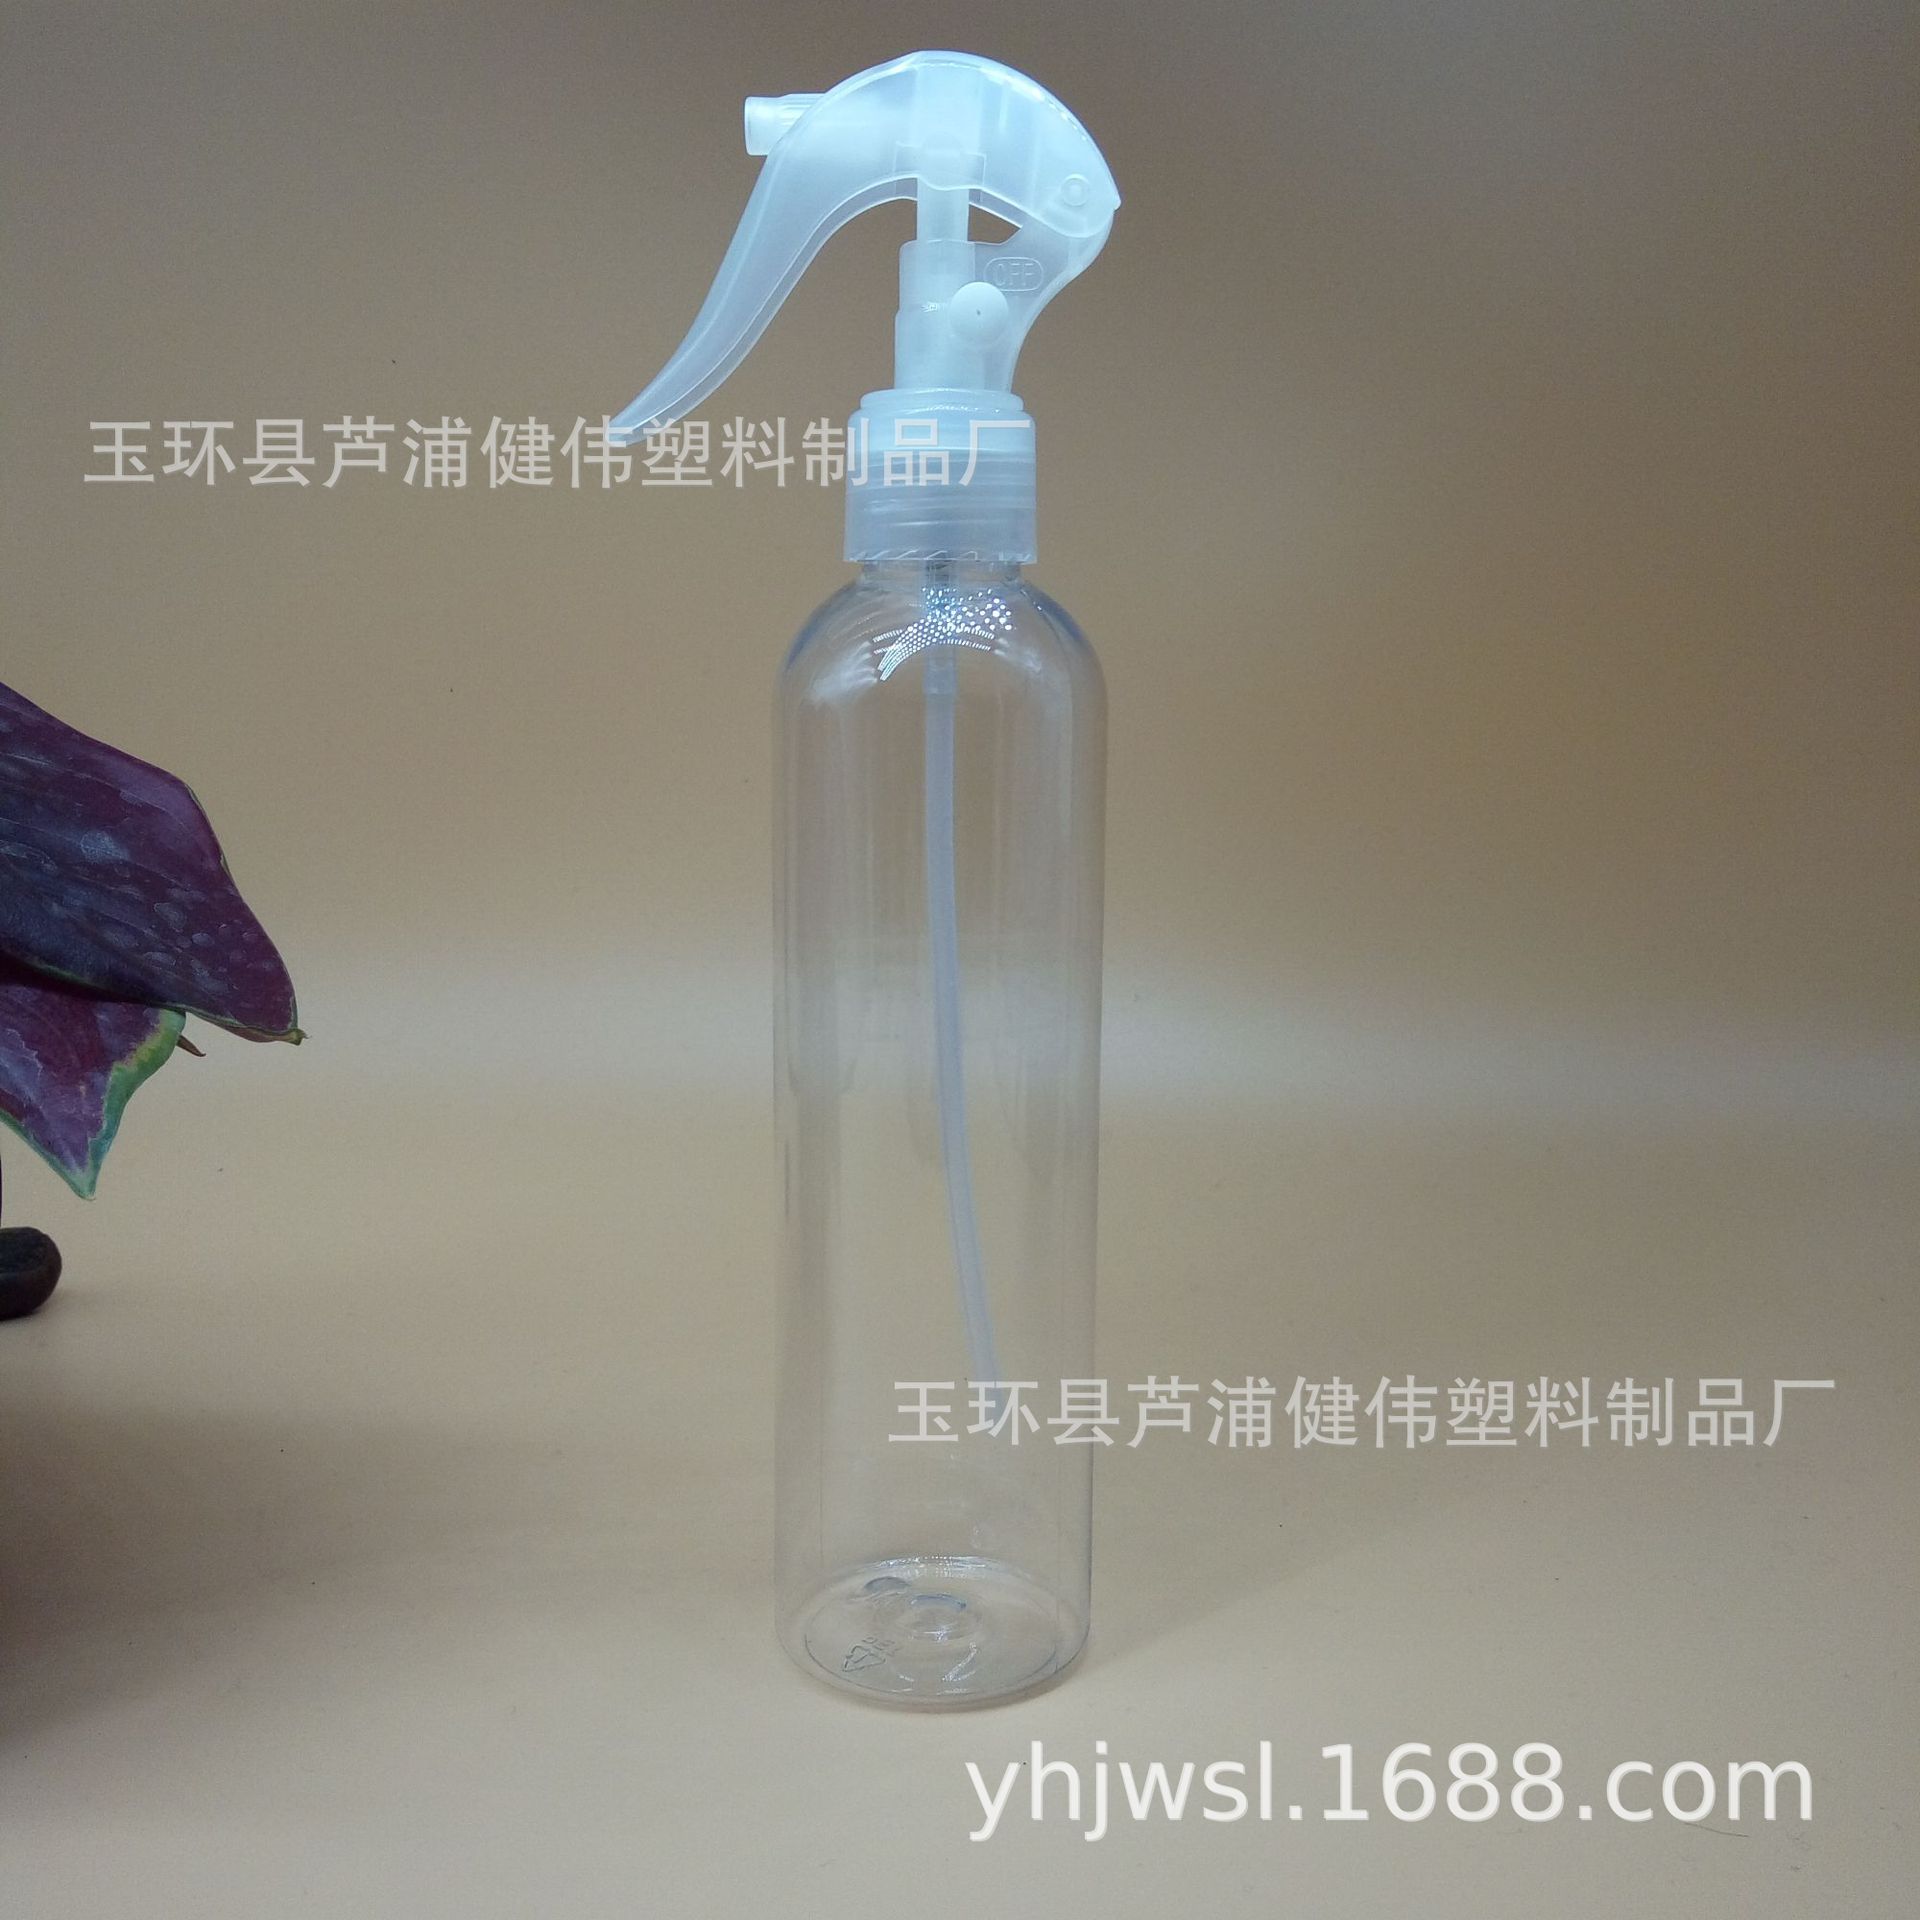 Manufacturers Spot 250ML Rounded shoulders transparent Plastic Spray bottle PET Mouse liquid distributor Bottles